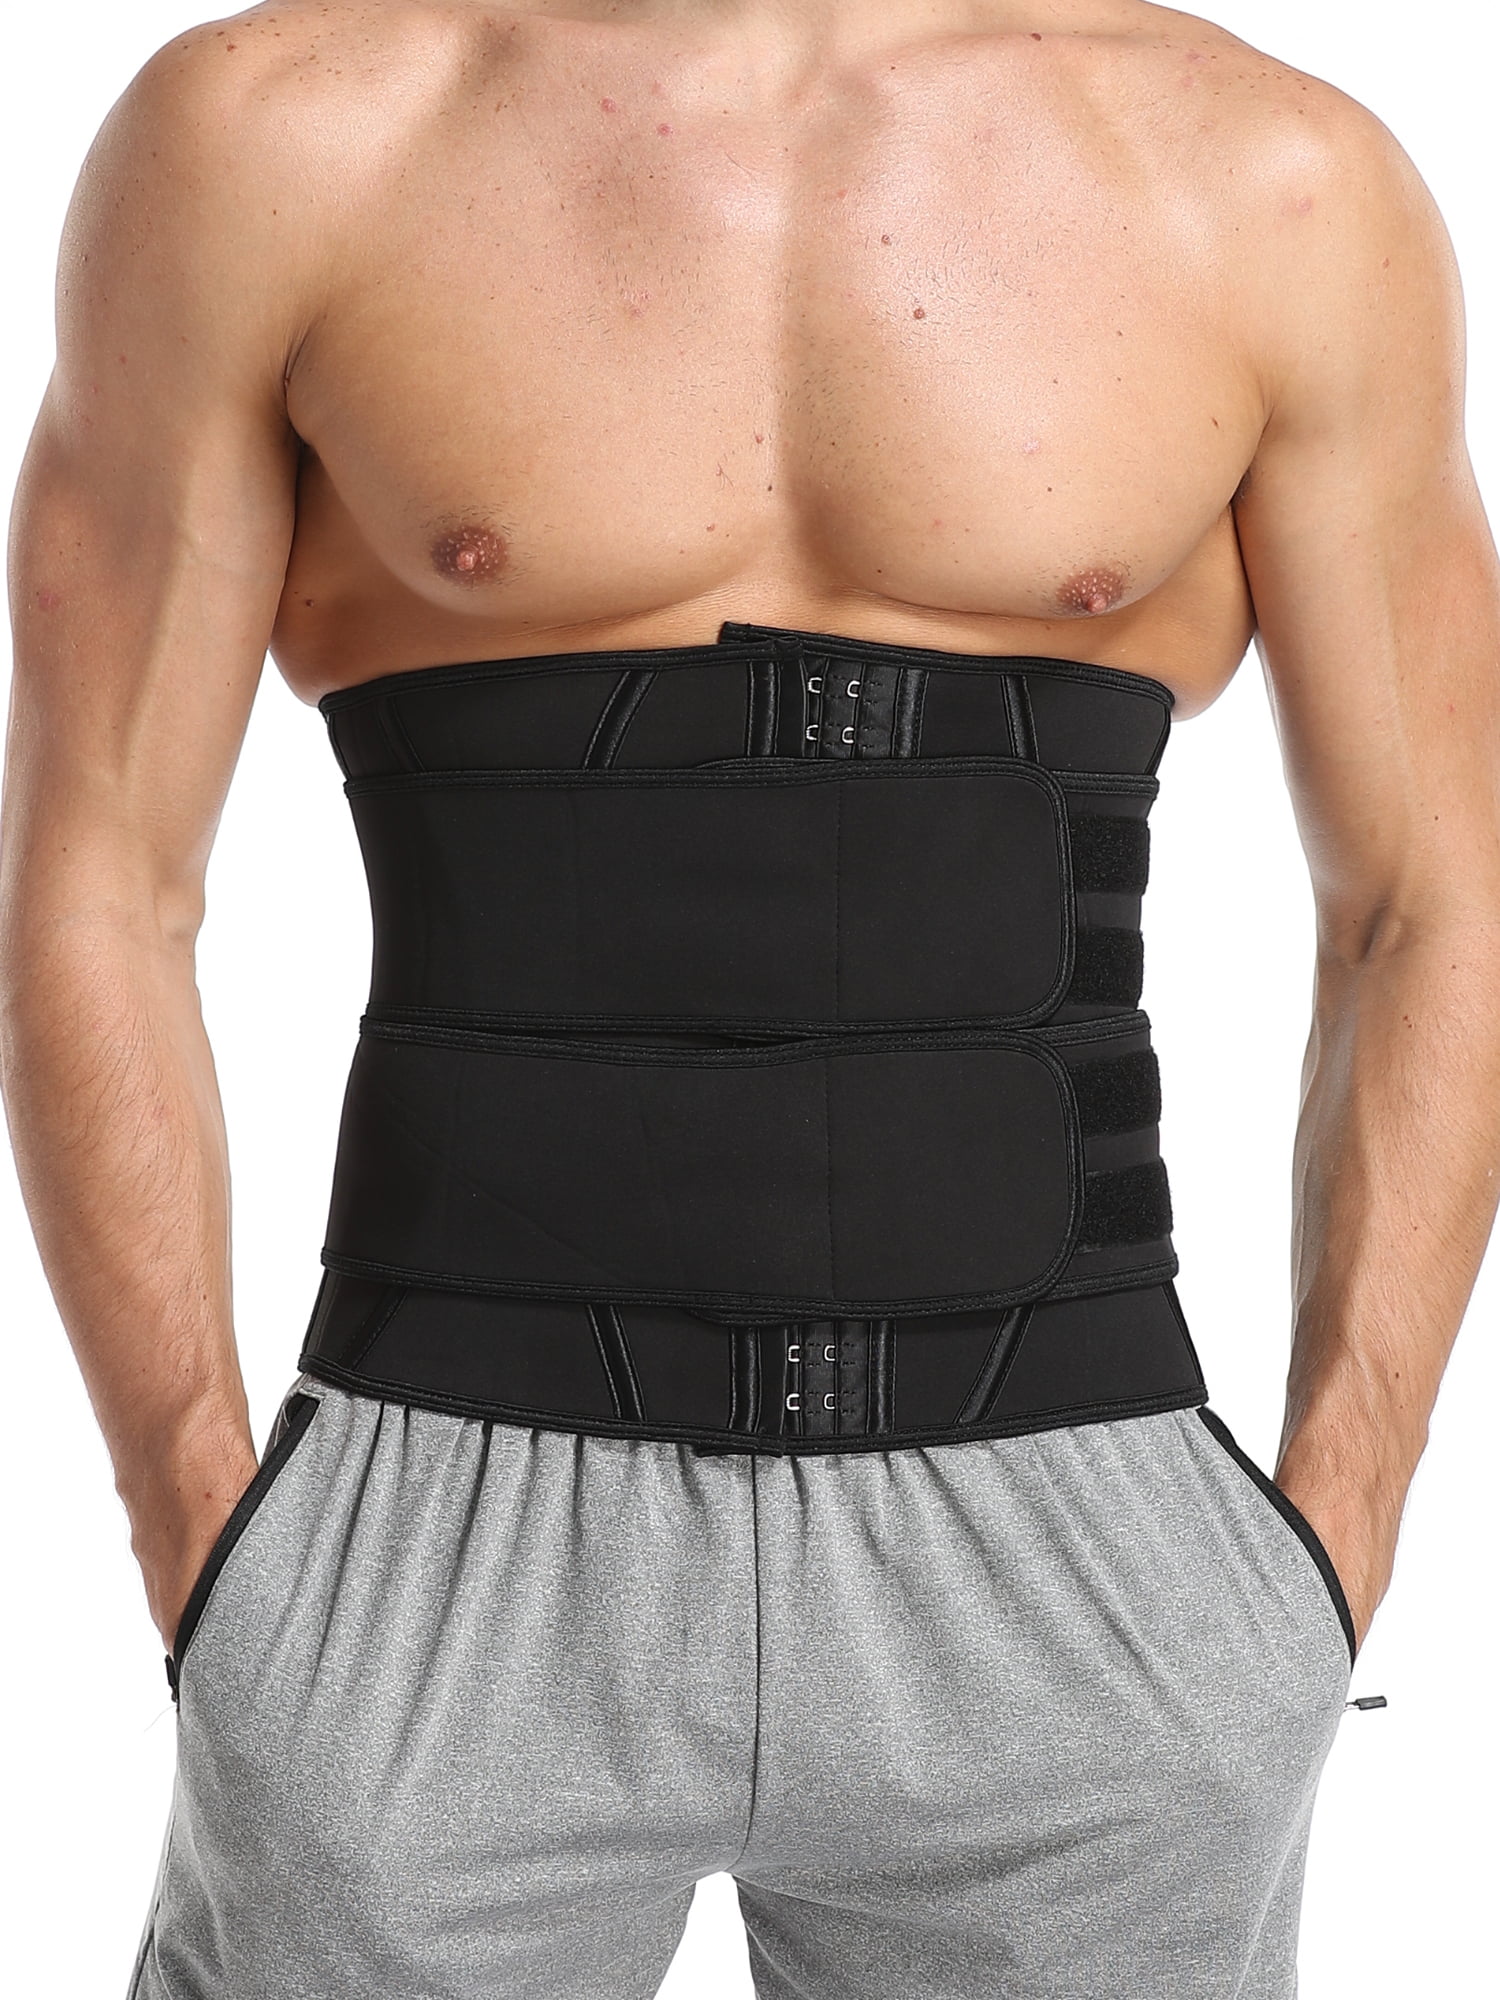 Sauna Waist Trimmer Belt Weight Loss Back Support Neoprene Snug Fit Belly Belt Sweat AB Belt with Adjustable Double Straps Wide Men Workout Waist Trainer 